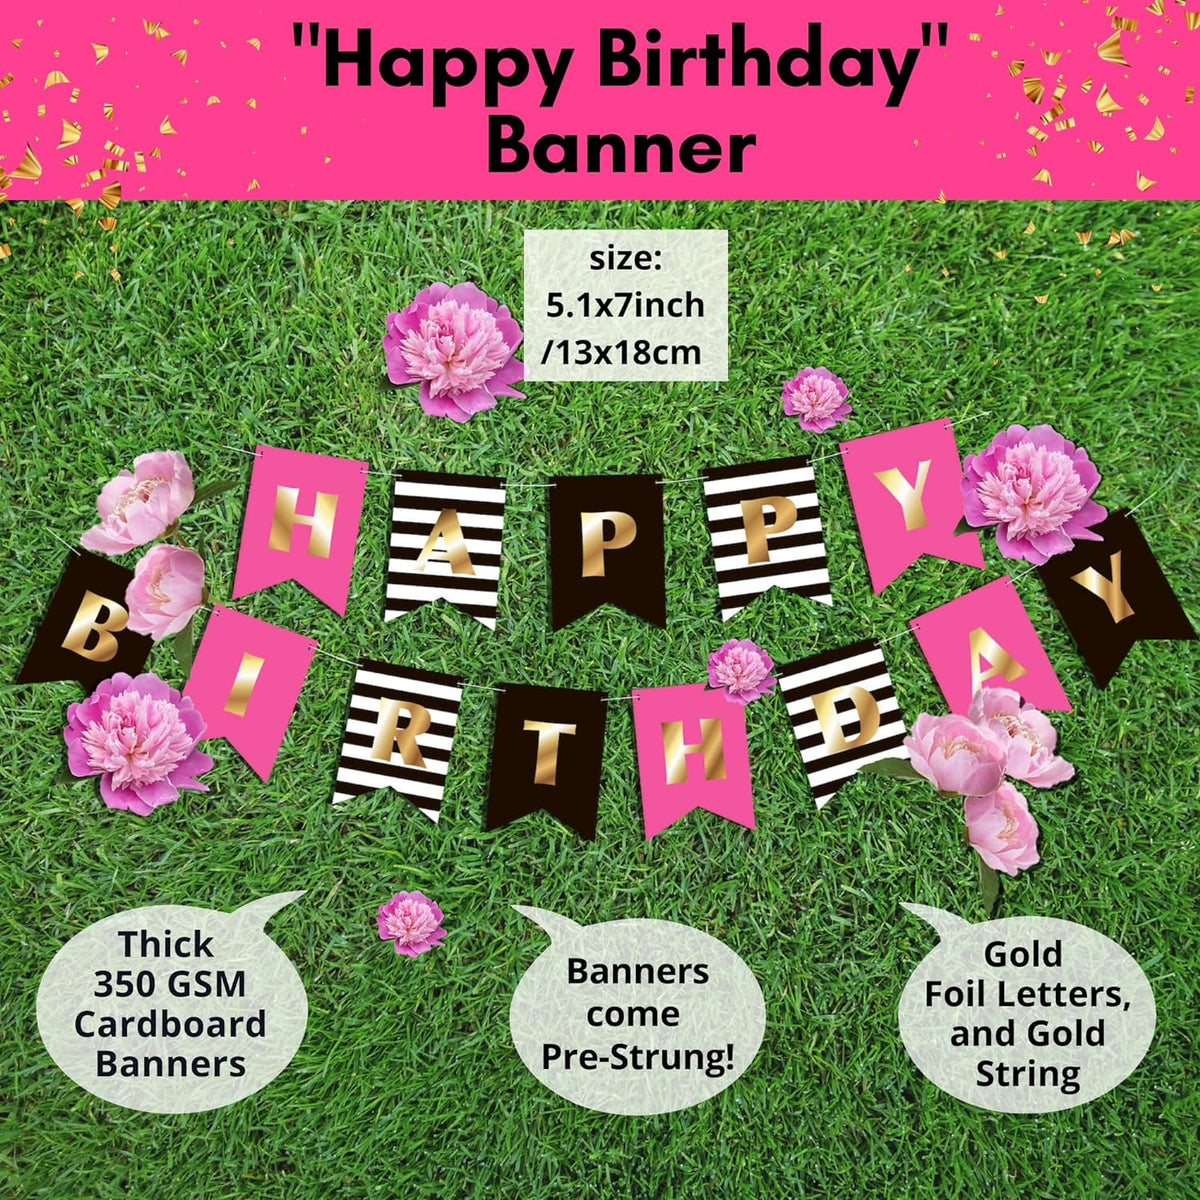 RainMeadow Premium Happy Birthday Decorations Party Set Kit for Women Girls Hot Pink Gold Black White Kate Spade Inspired Garland Bun